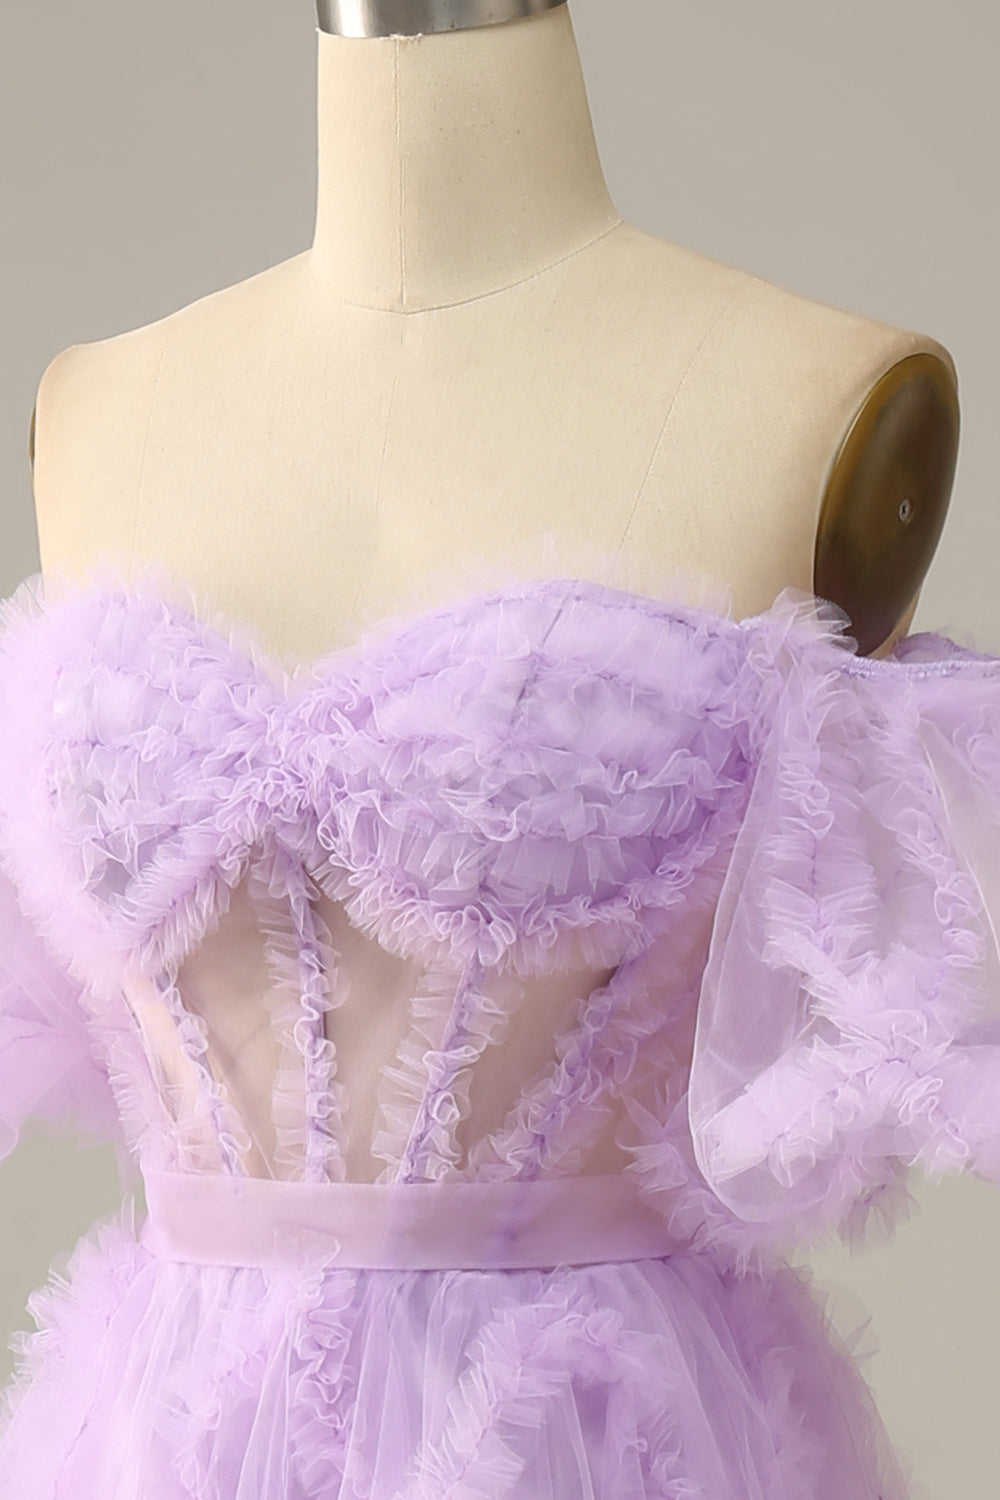 Zapakasa Women Purple Prom Dress Tulle A-Line Spaghetti Straps Party Dress with Beading, Purple / US18